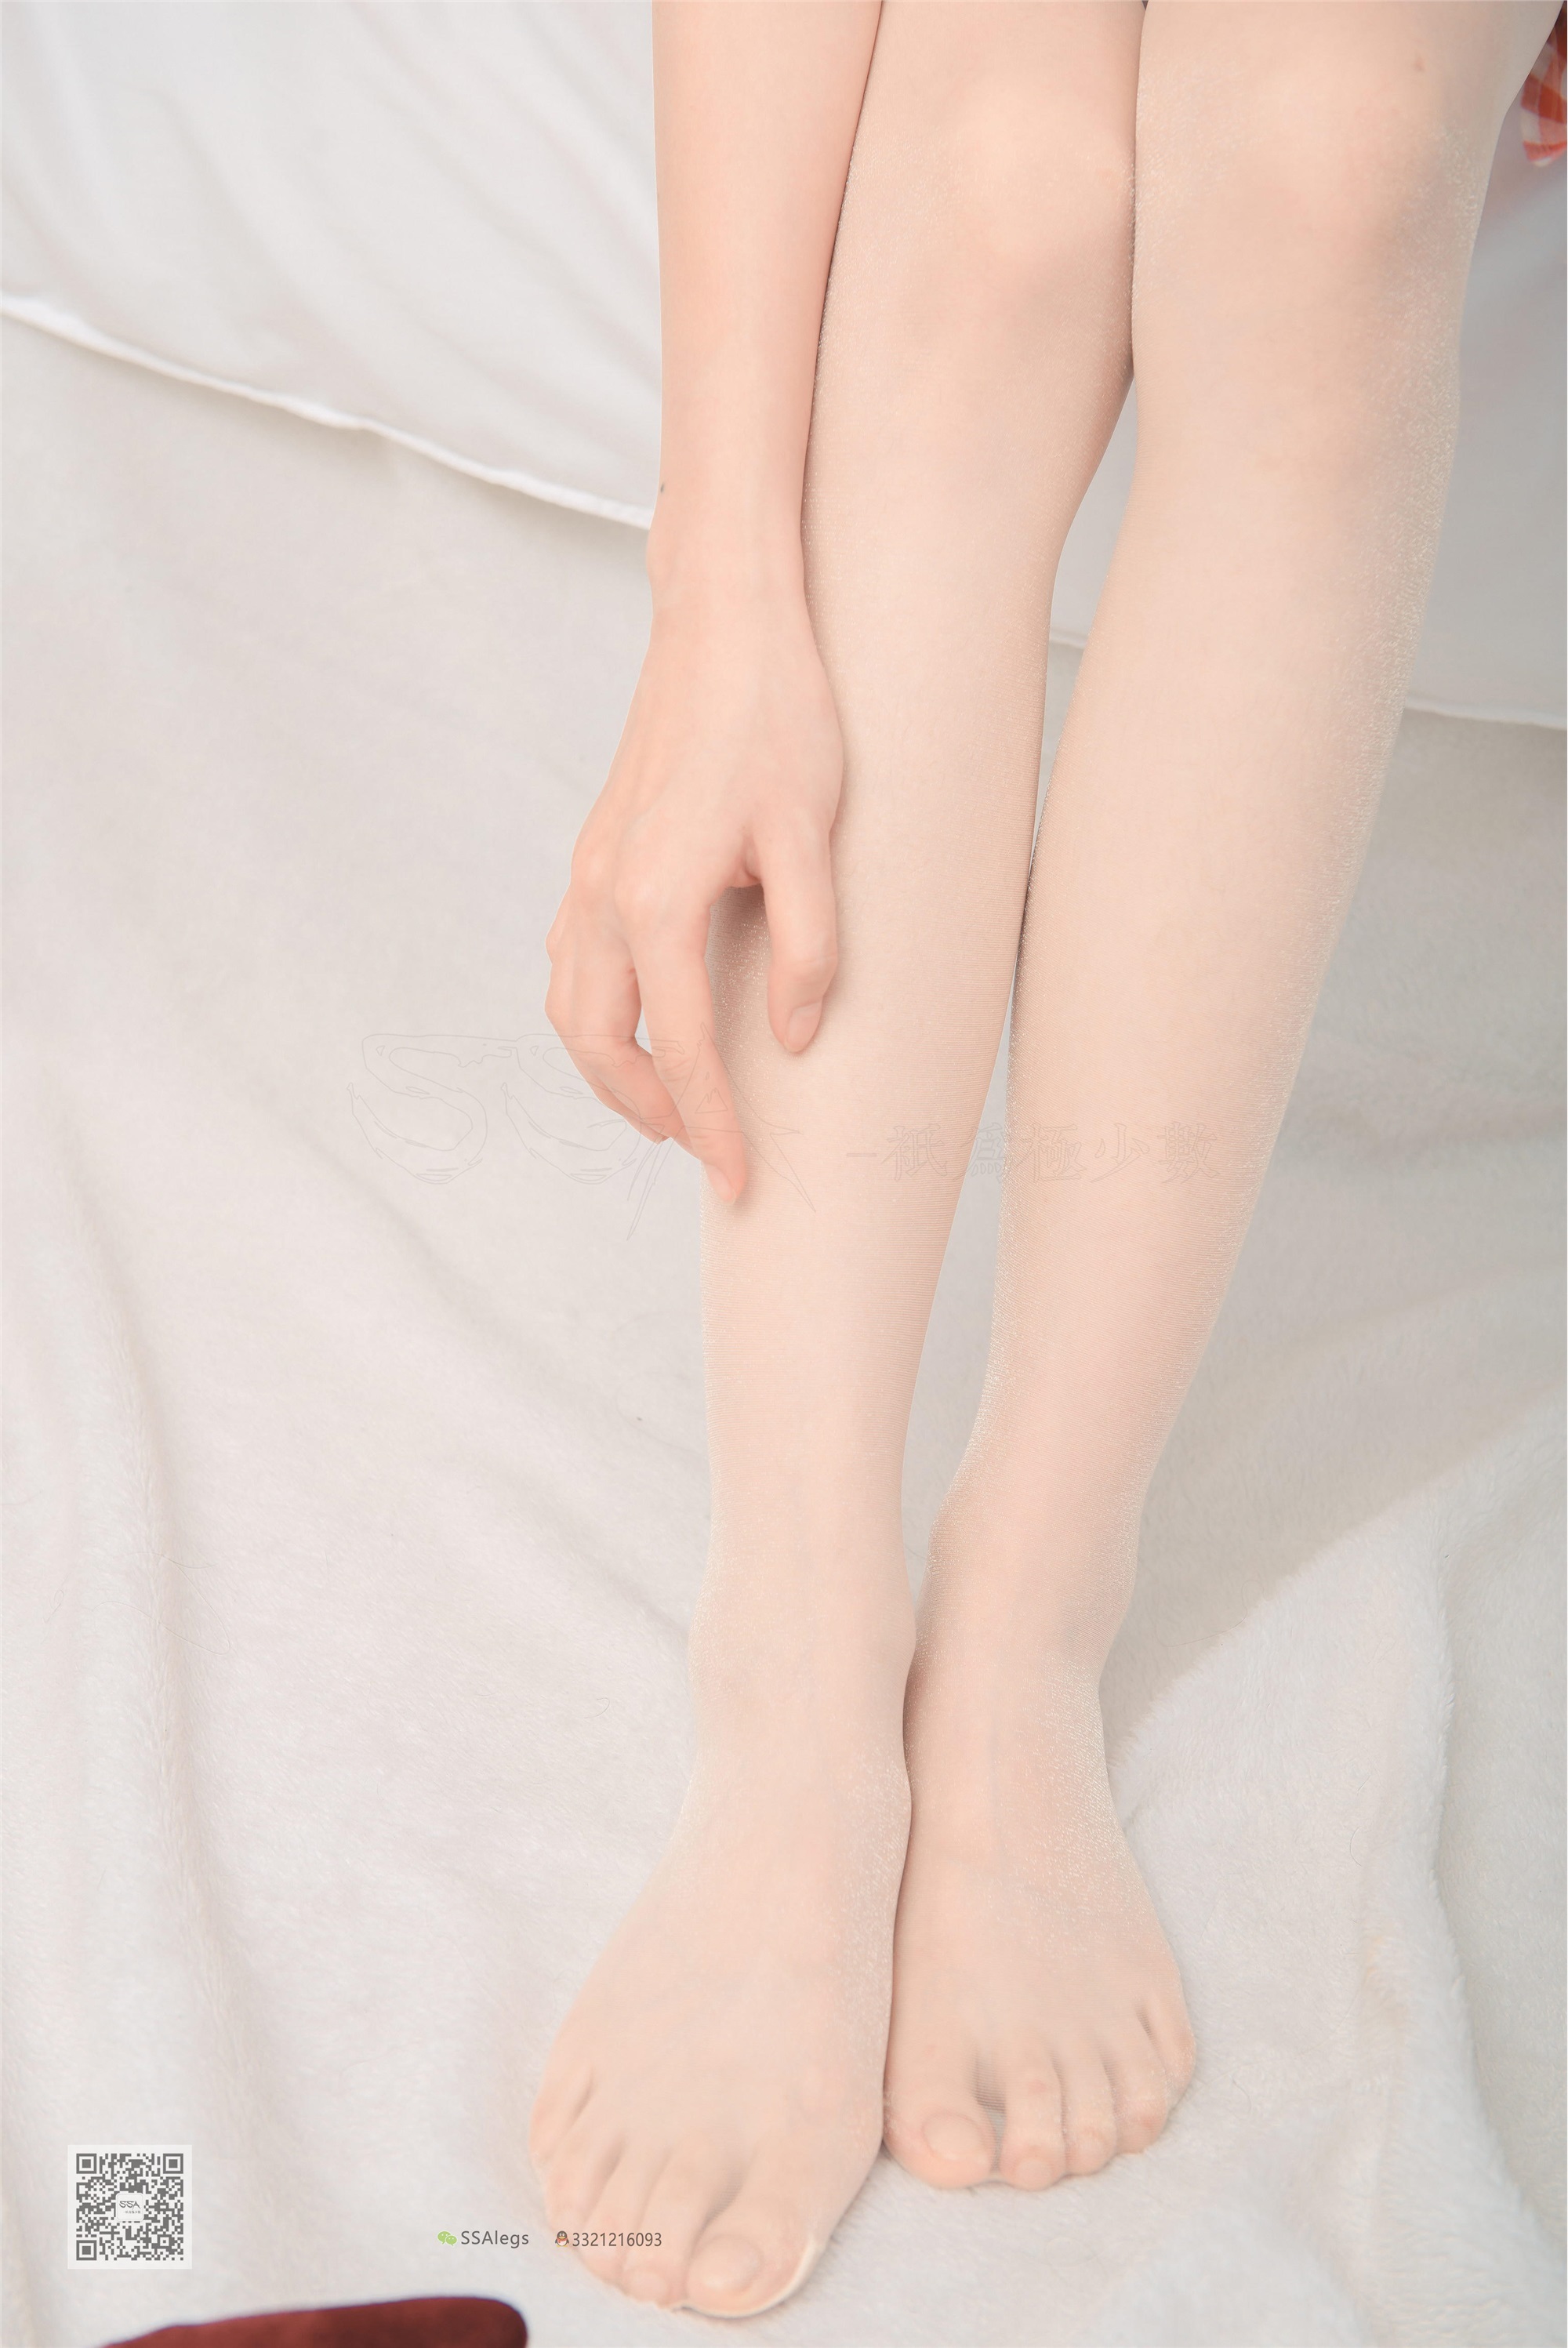 Another interpretation of SSA silk society 014 xiaoqiqi flash open crotch stockings